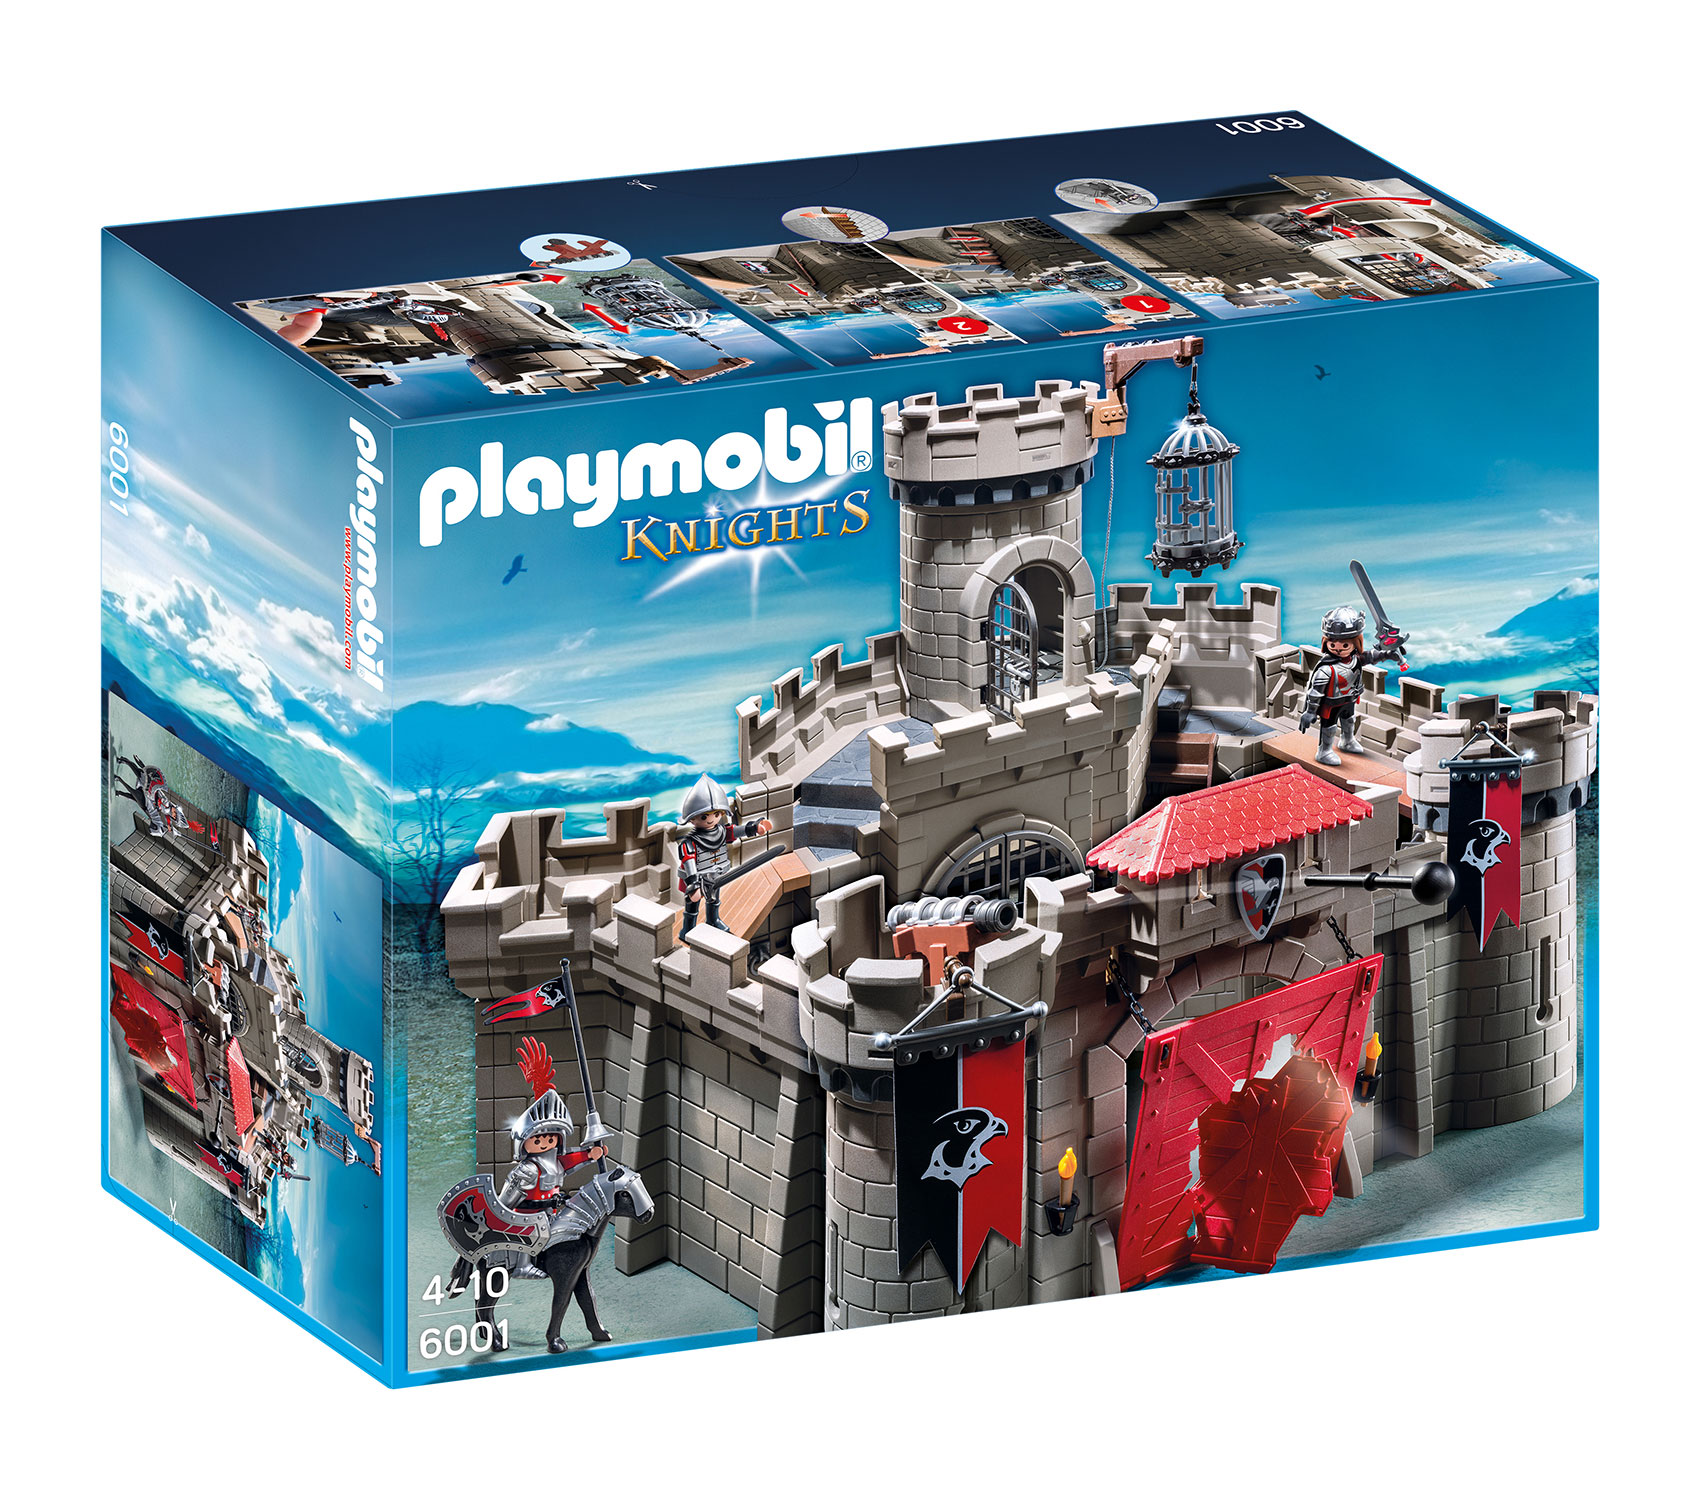 PLAYMOBIL 6001 Hawk Knights Castle Playset & Extras Geobra for sale online 